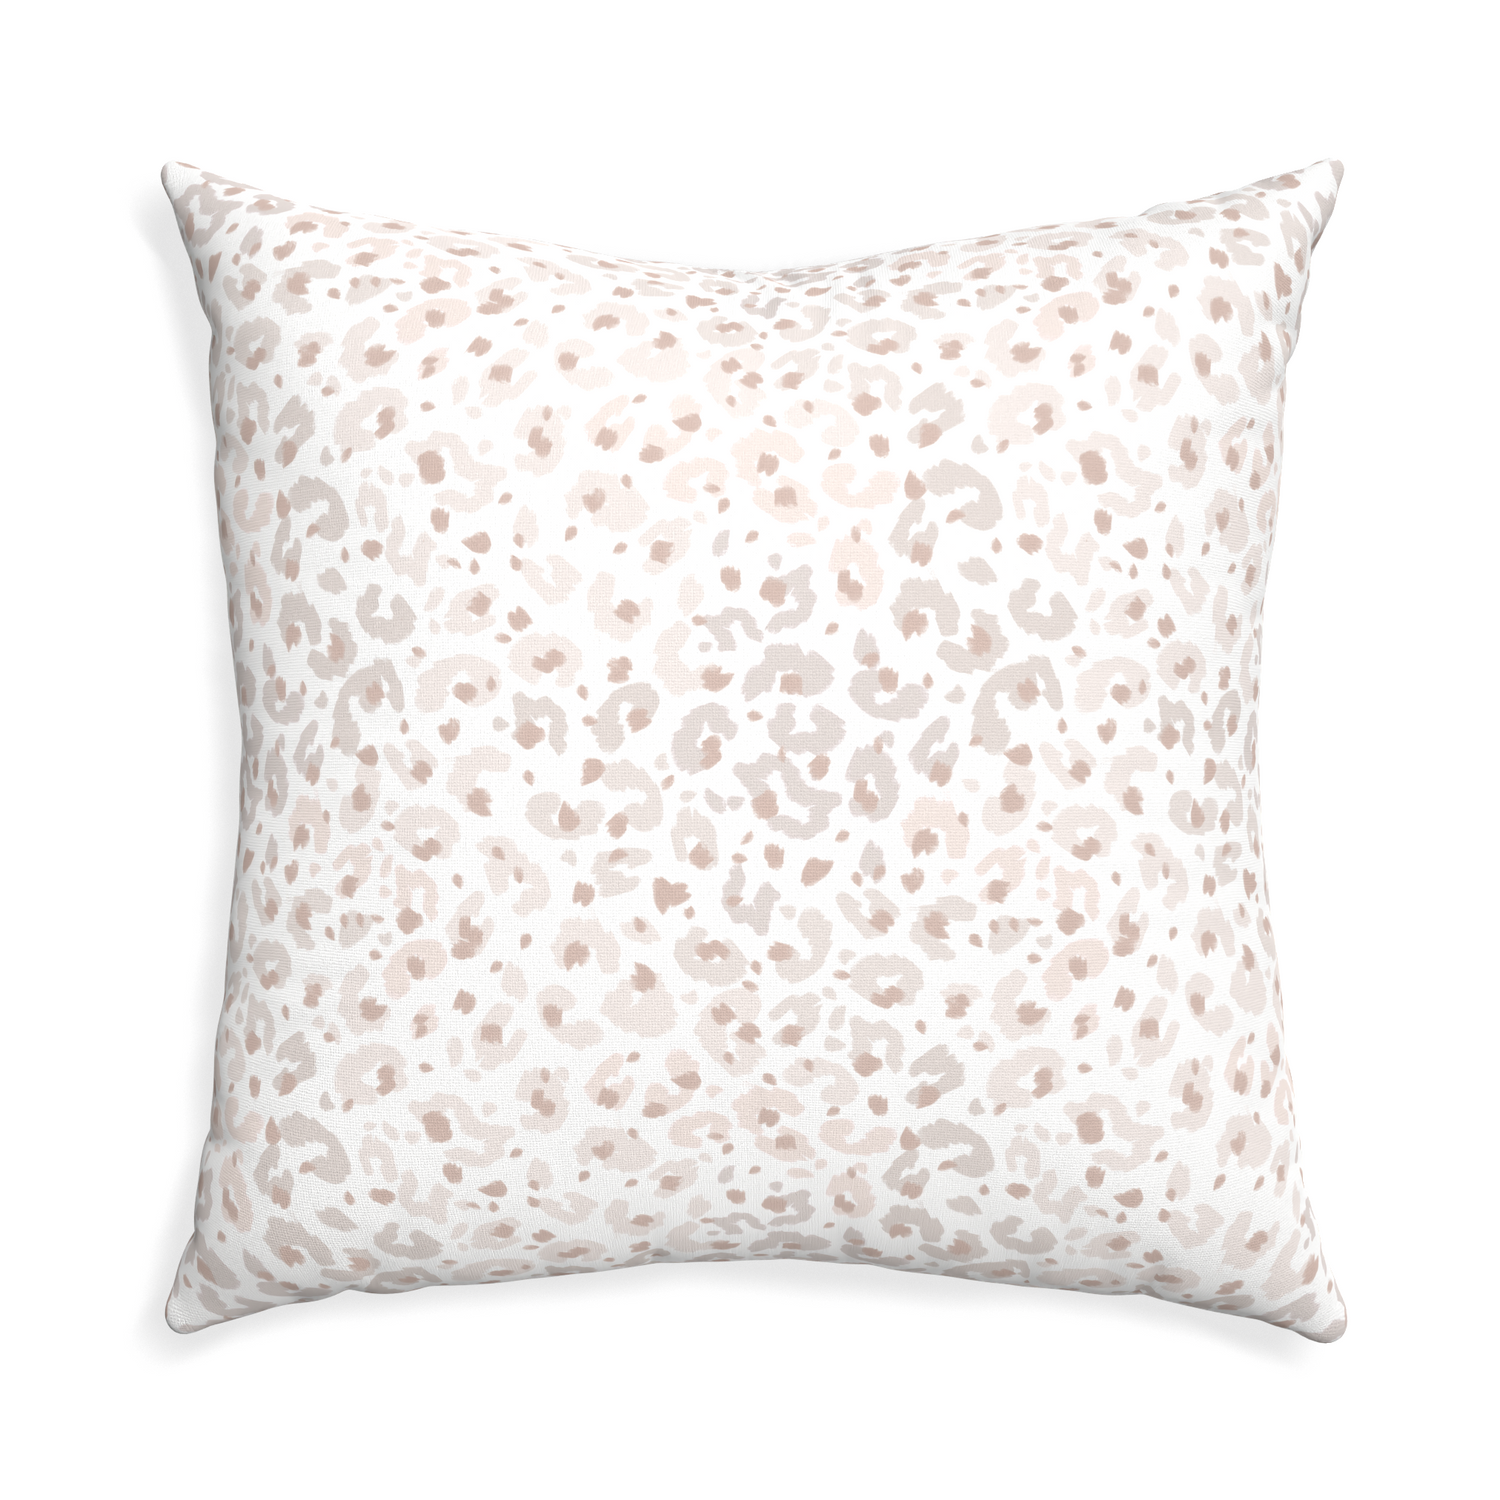 Euro-sham rosie custom pillow with none on white background